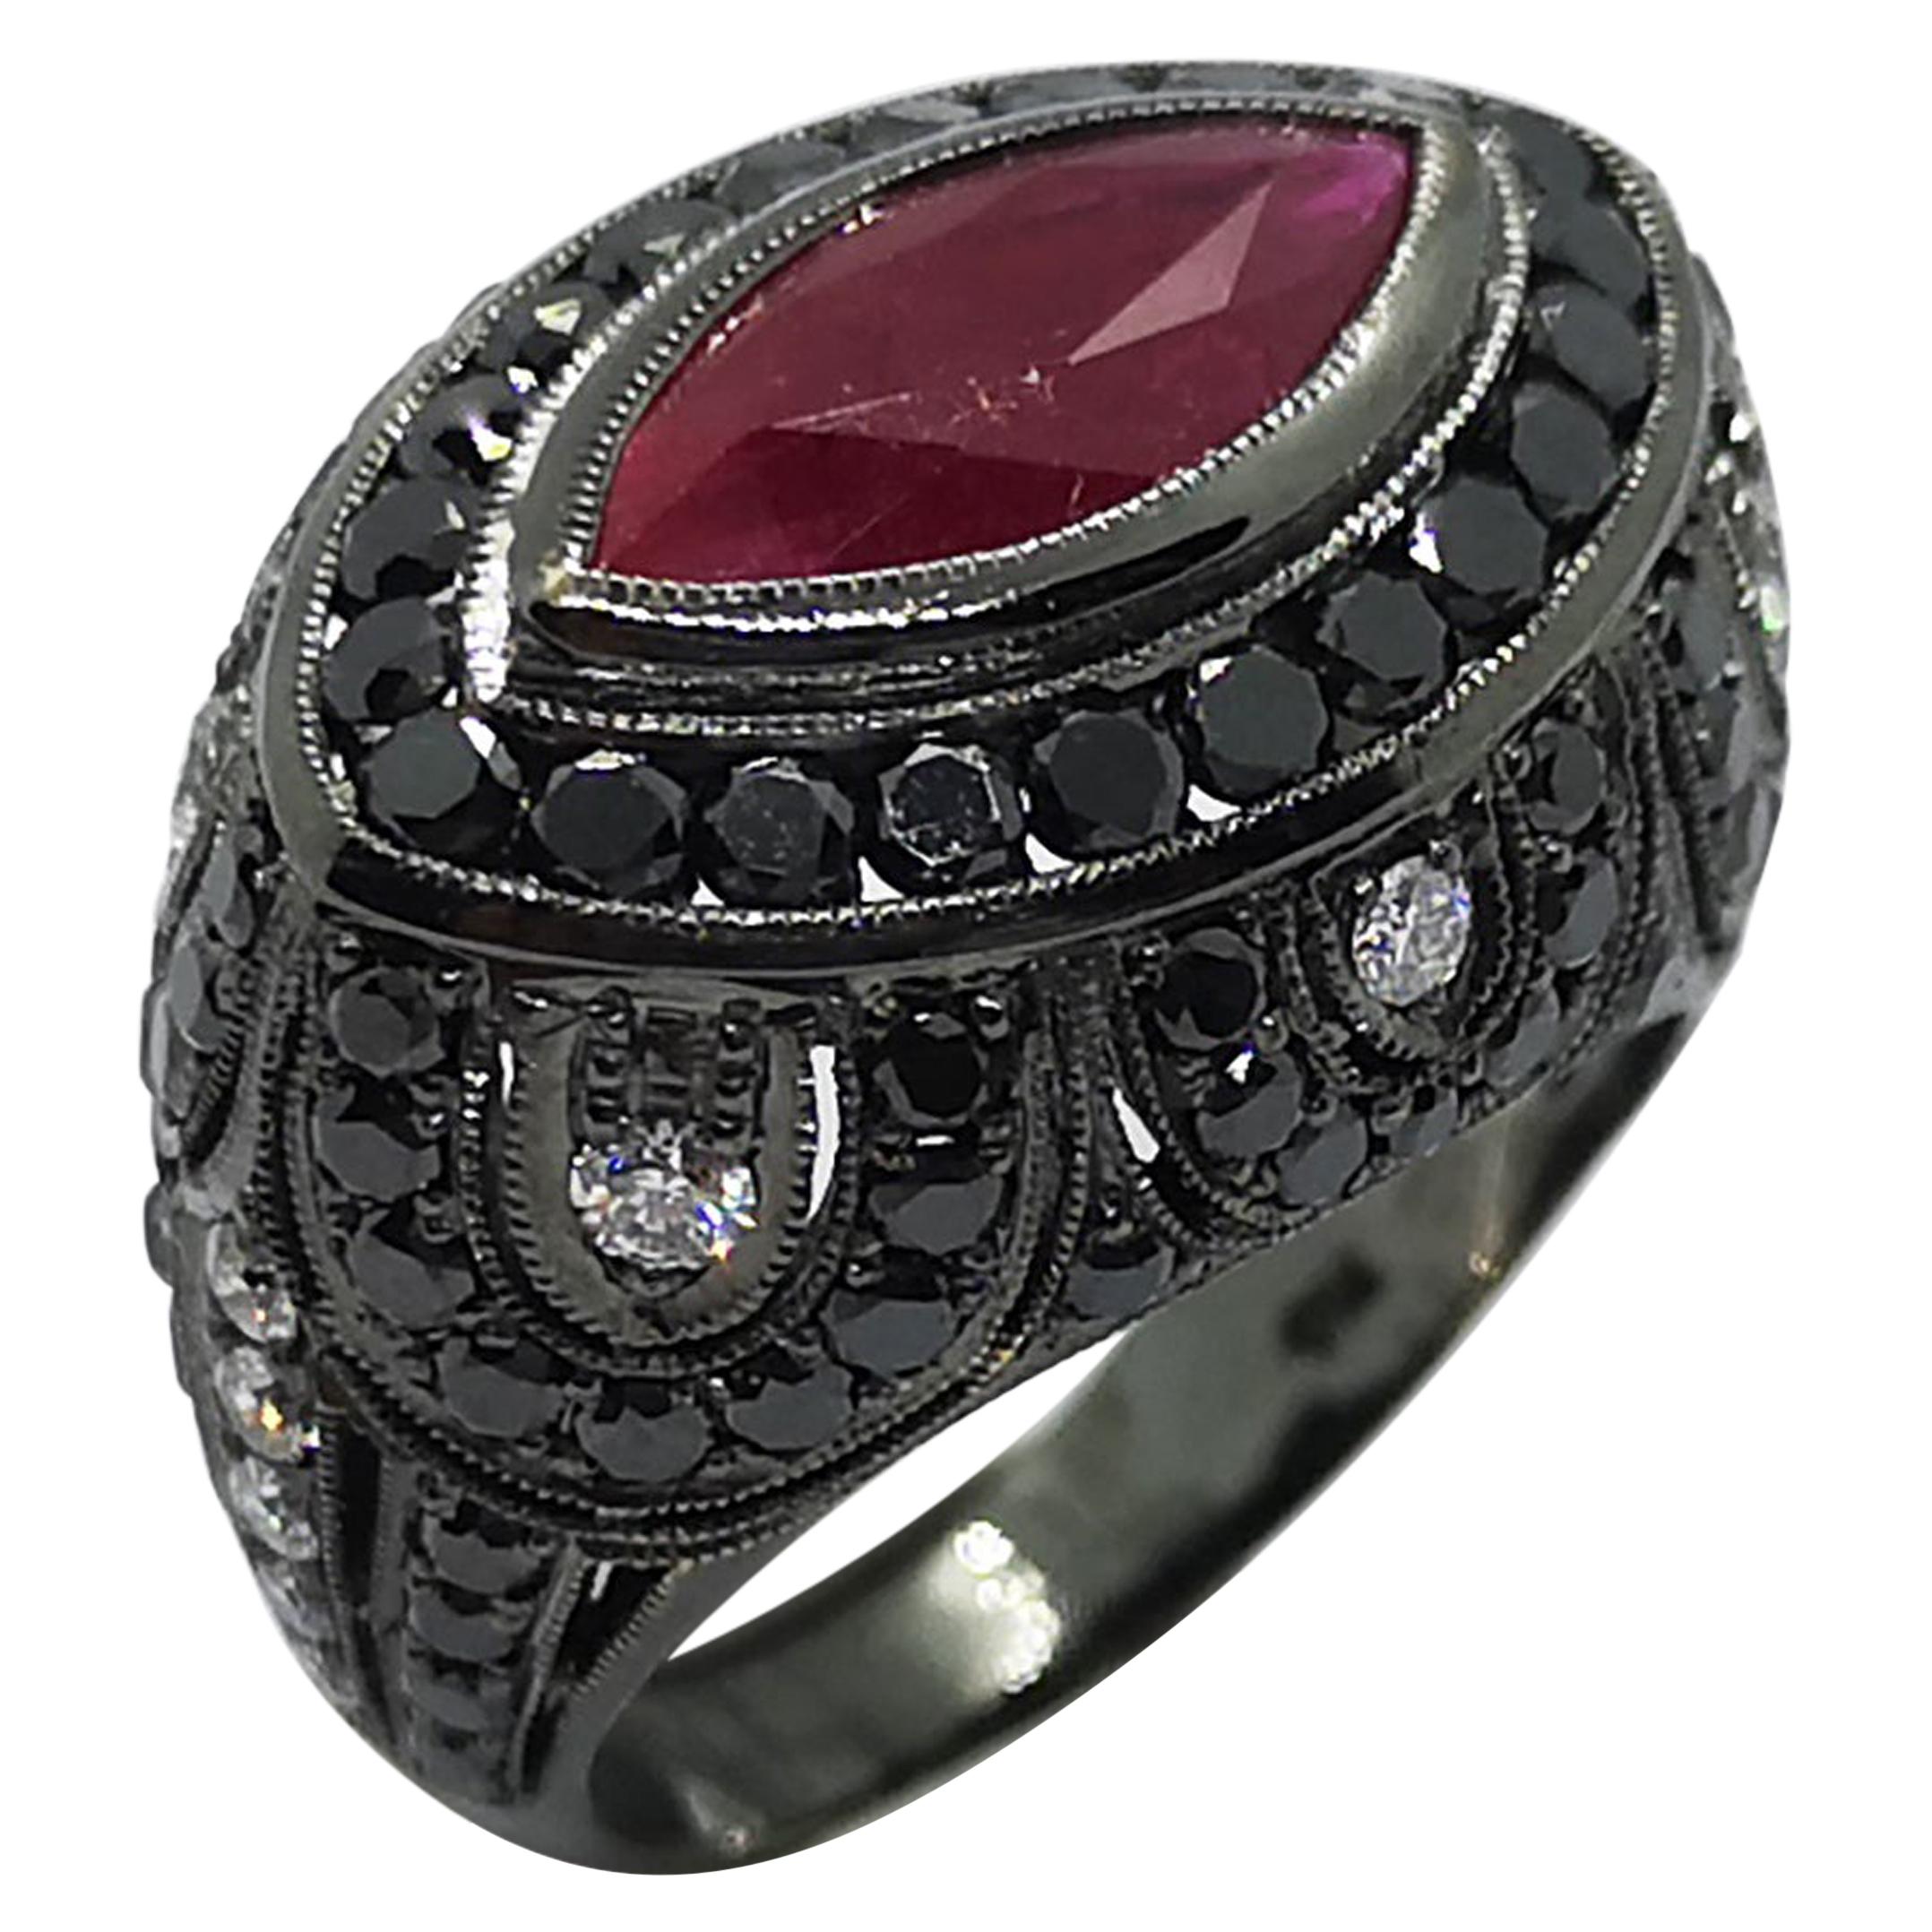 Marquise Ruby, Black Diamond with Diamond Ring Set in 18 Karat White Gold